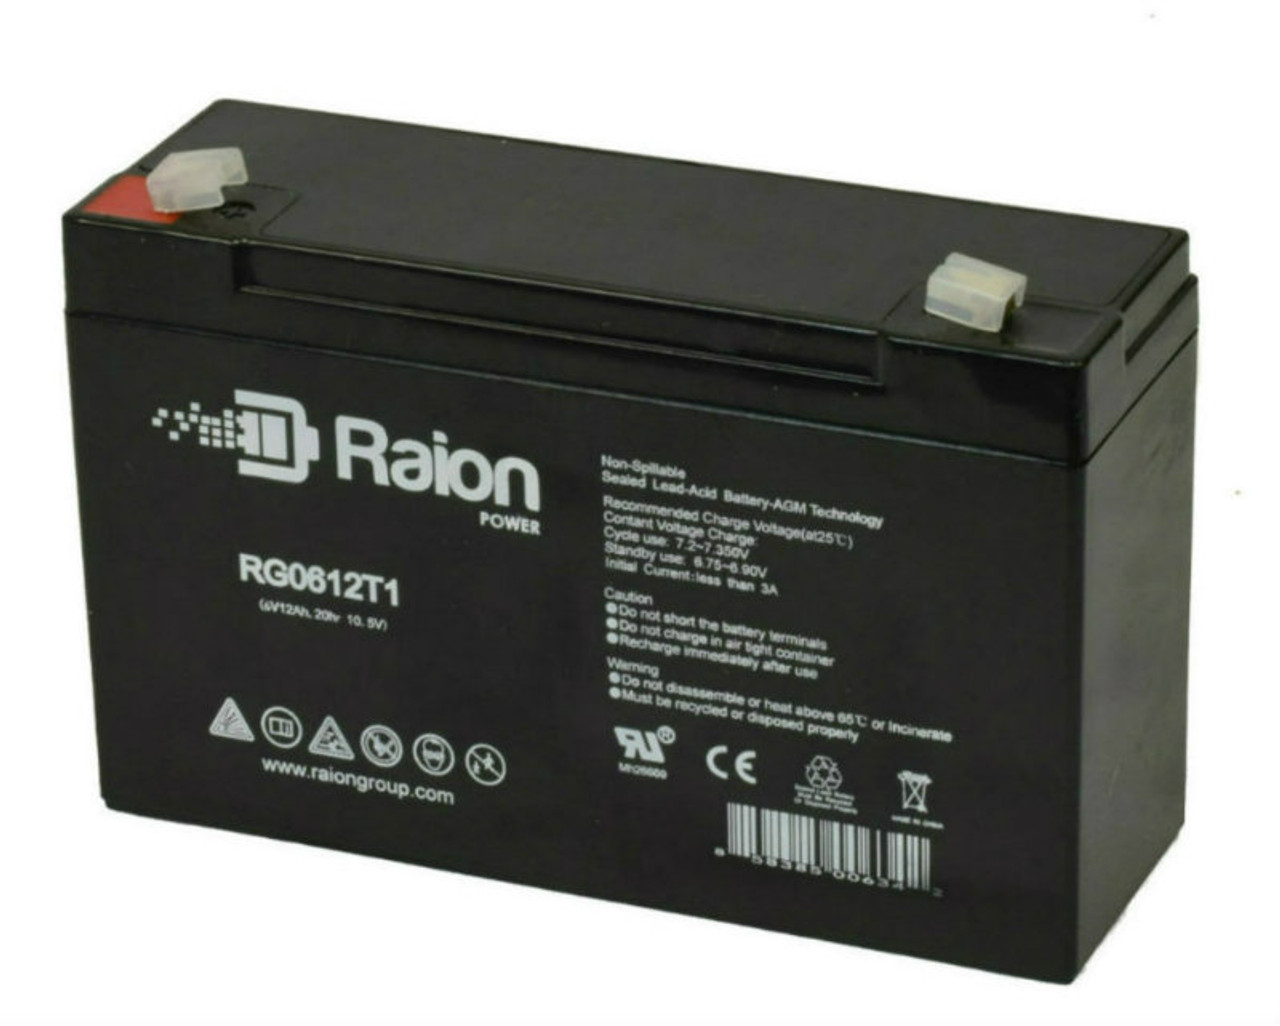 Raion Power RG06120T1 6V 12Ah Replacement UPS Battery Cartridge for Tripp Lite BC Pro 675VA BCPROINT675 Version 2